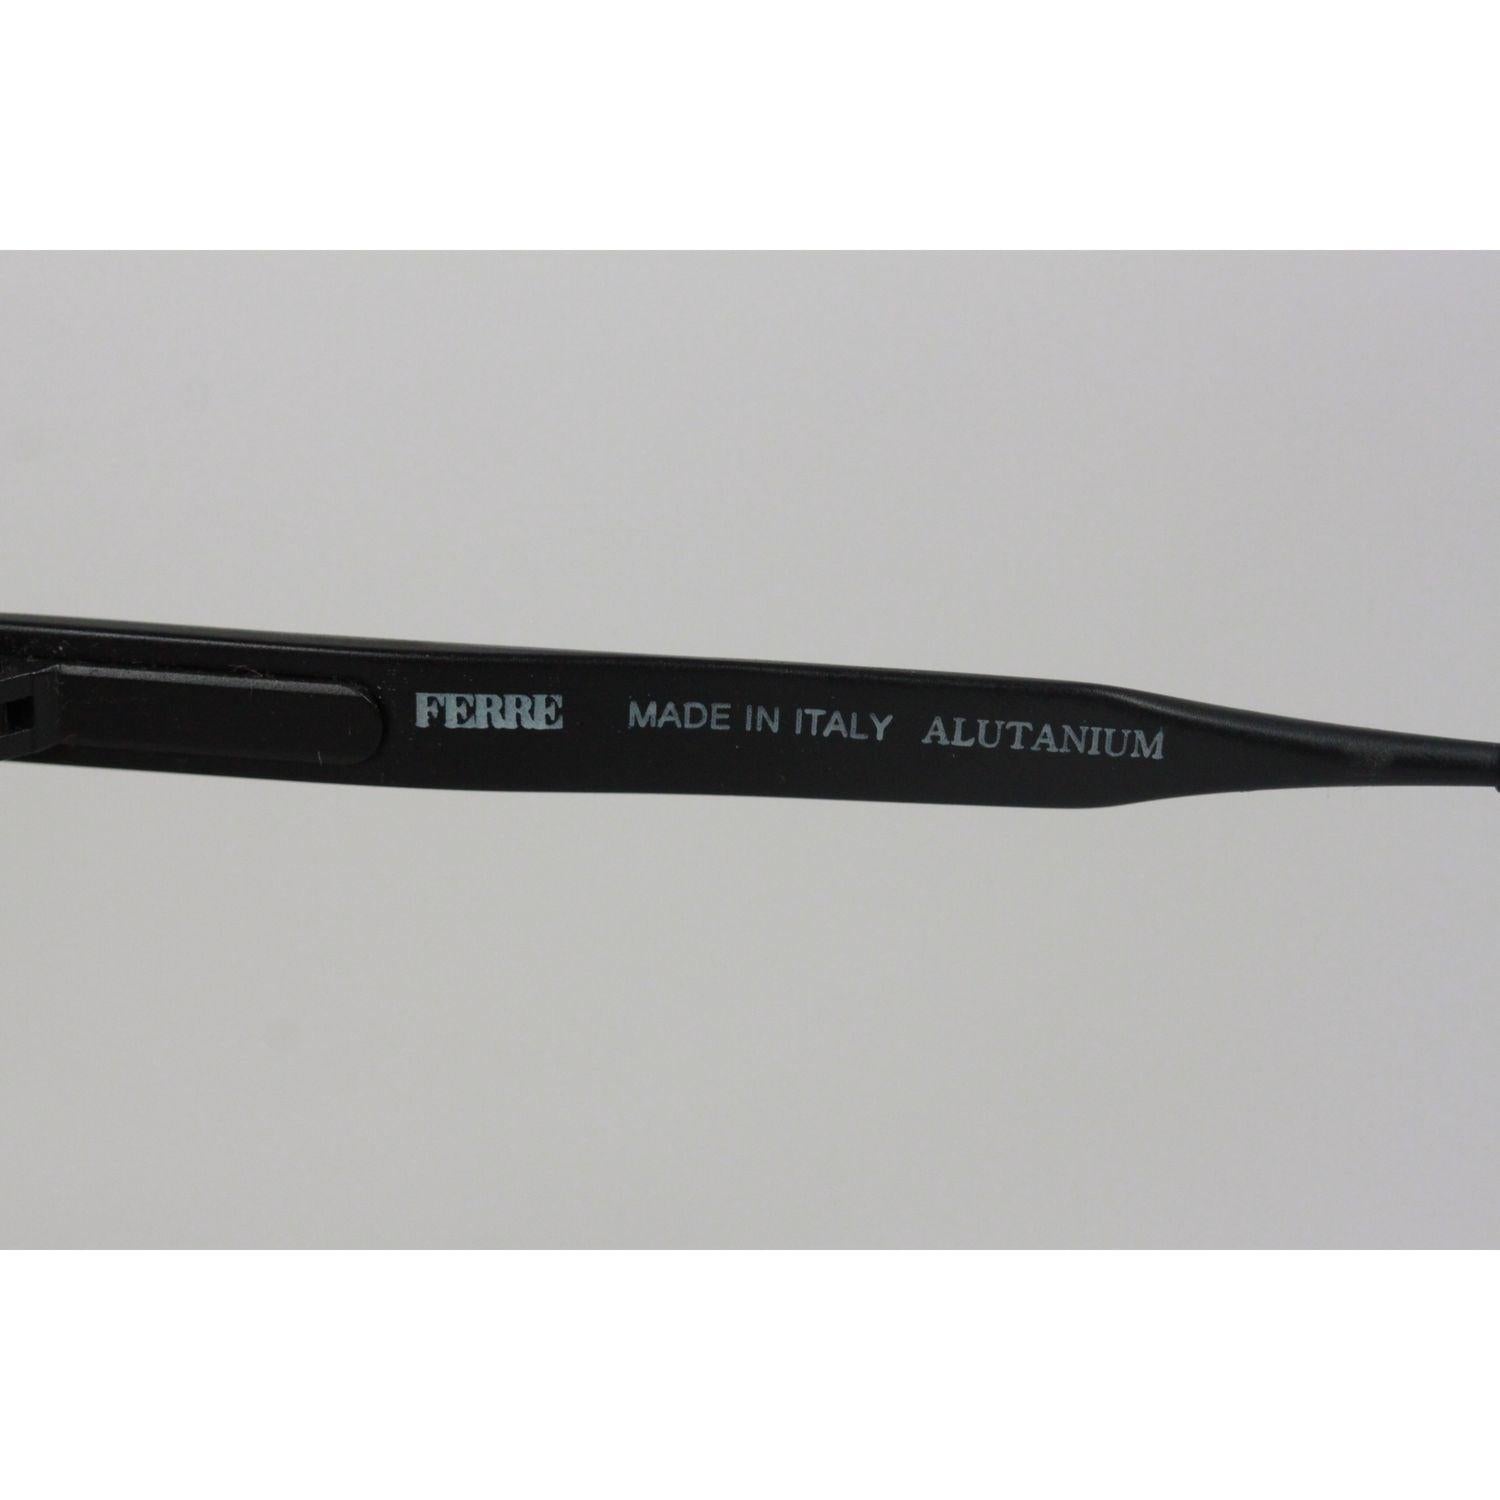 Gianfranco Ferre Vintage Alutanium Sunglasses GFF 30-582 New Old Stock 4